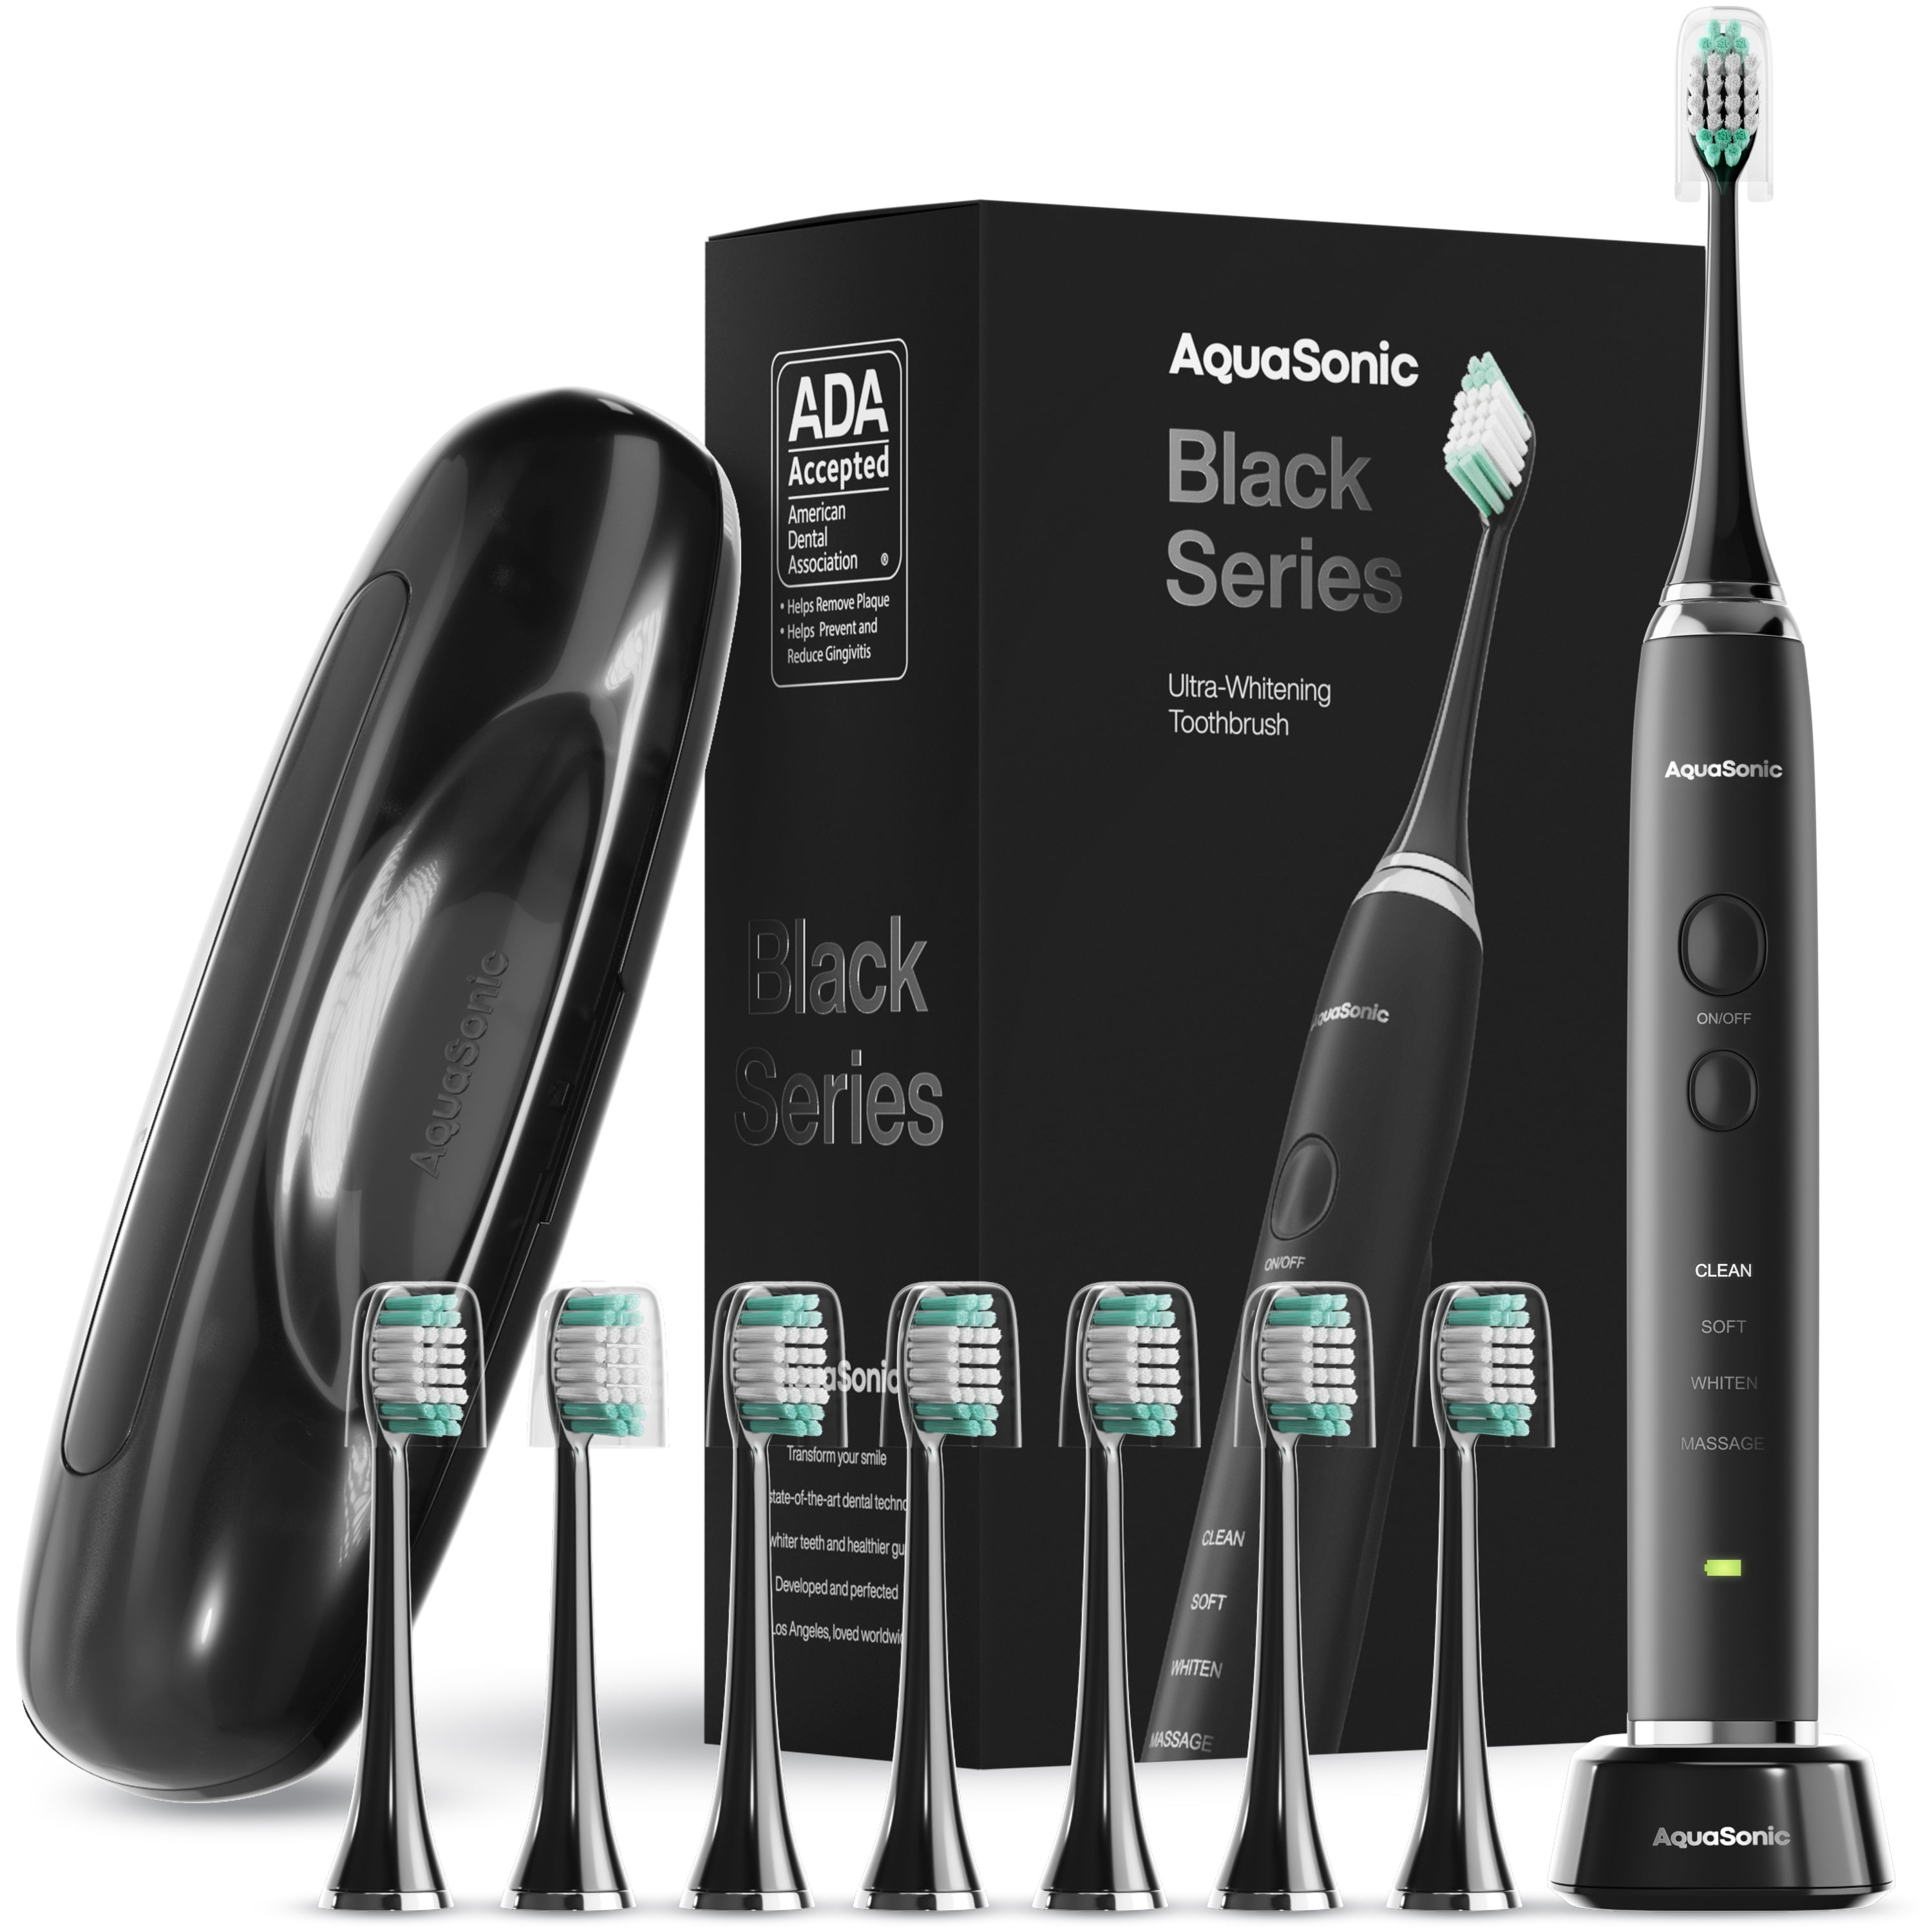 Big Brush™/Flex Brush™ Toothbrush Travel Case